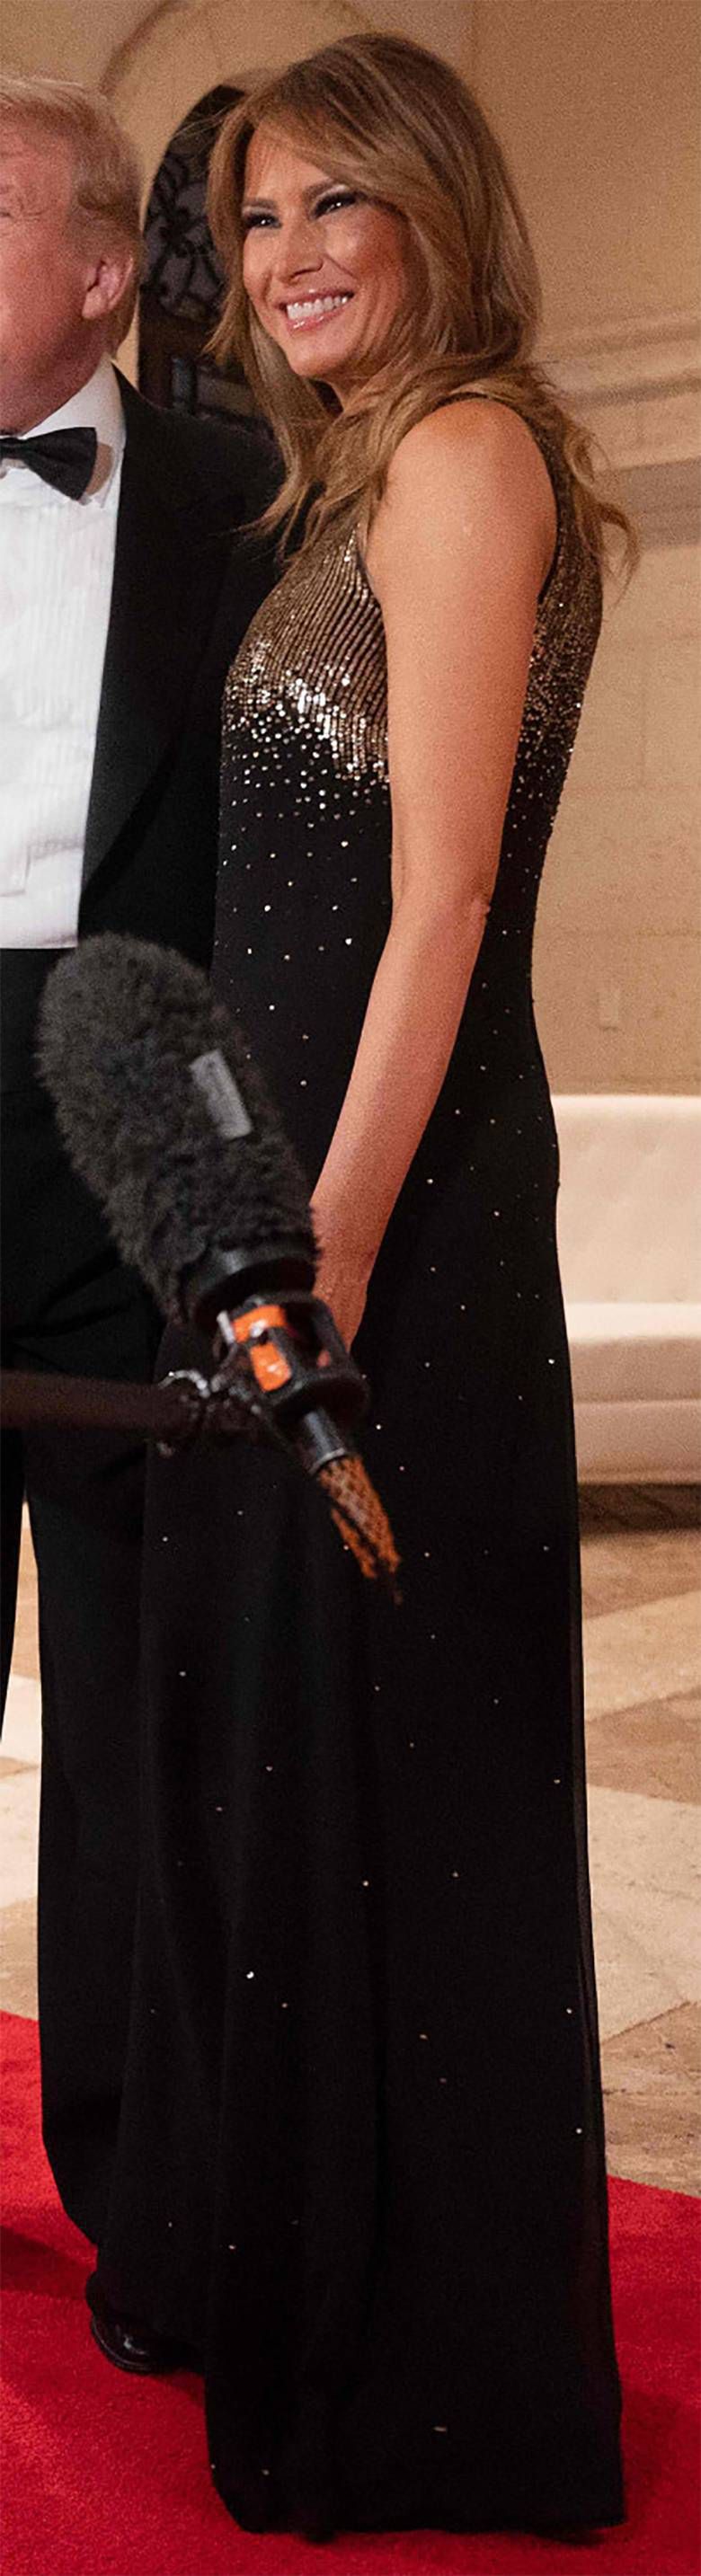 Melania Trump w kreacji Givenchy - Sylwester 2019